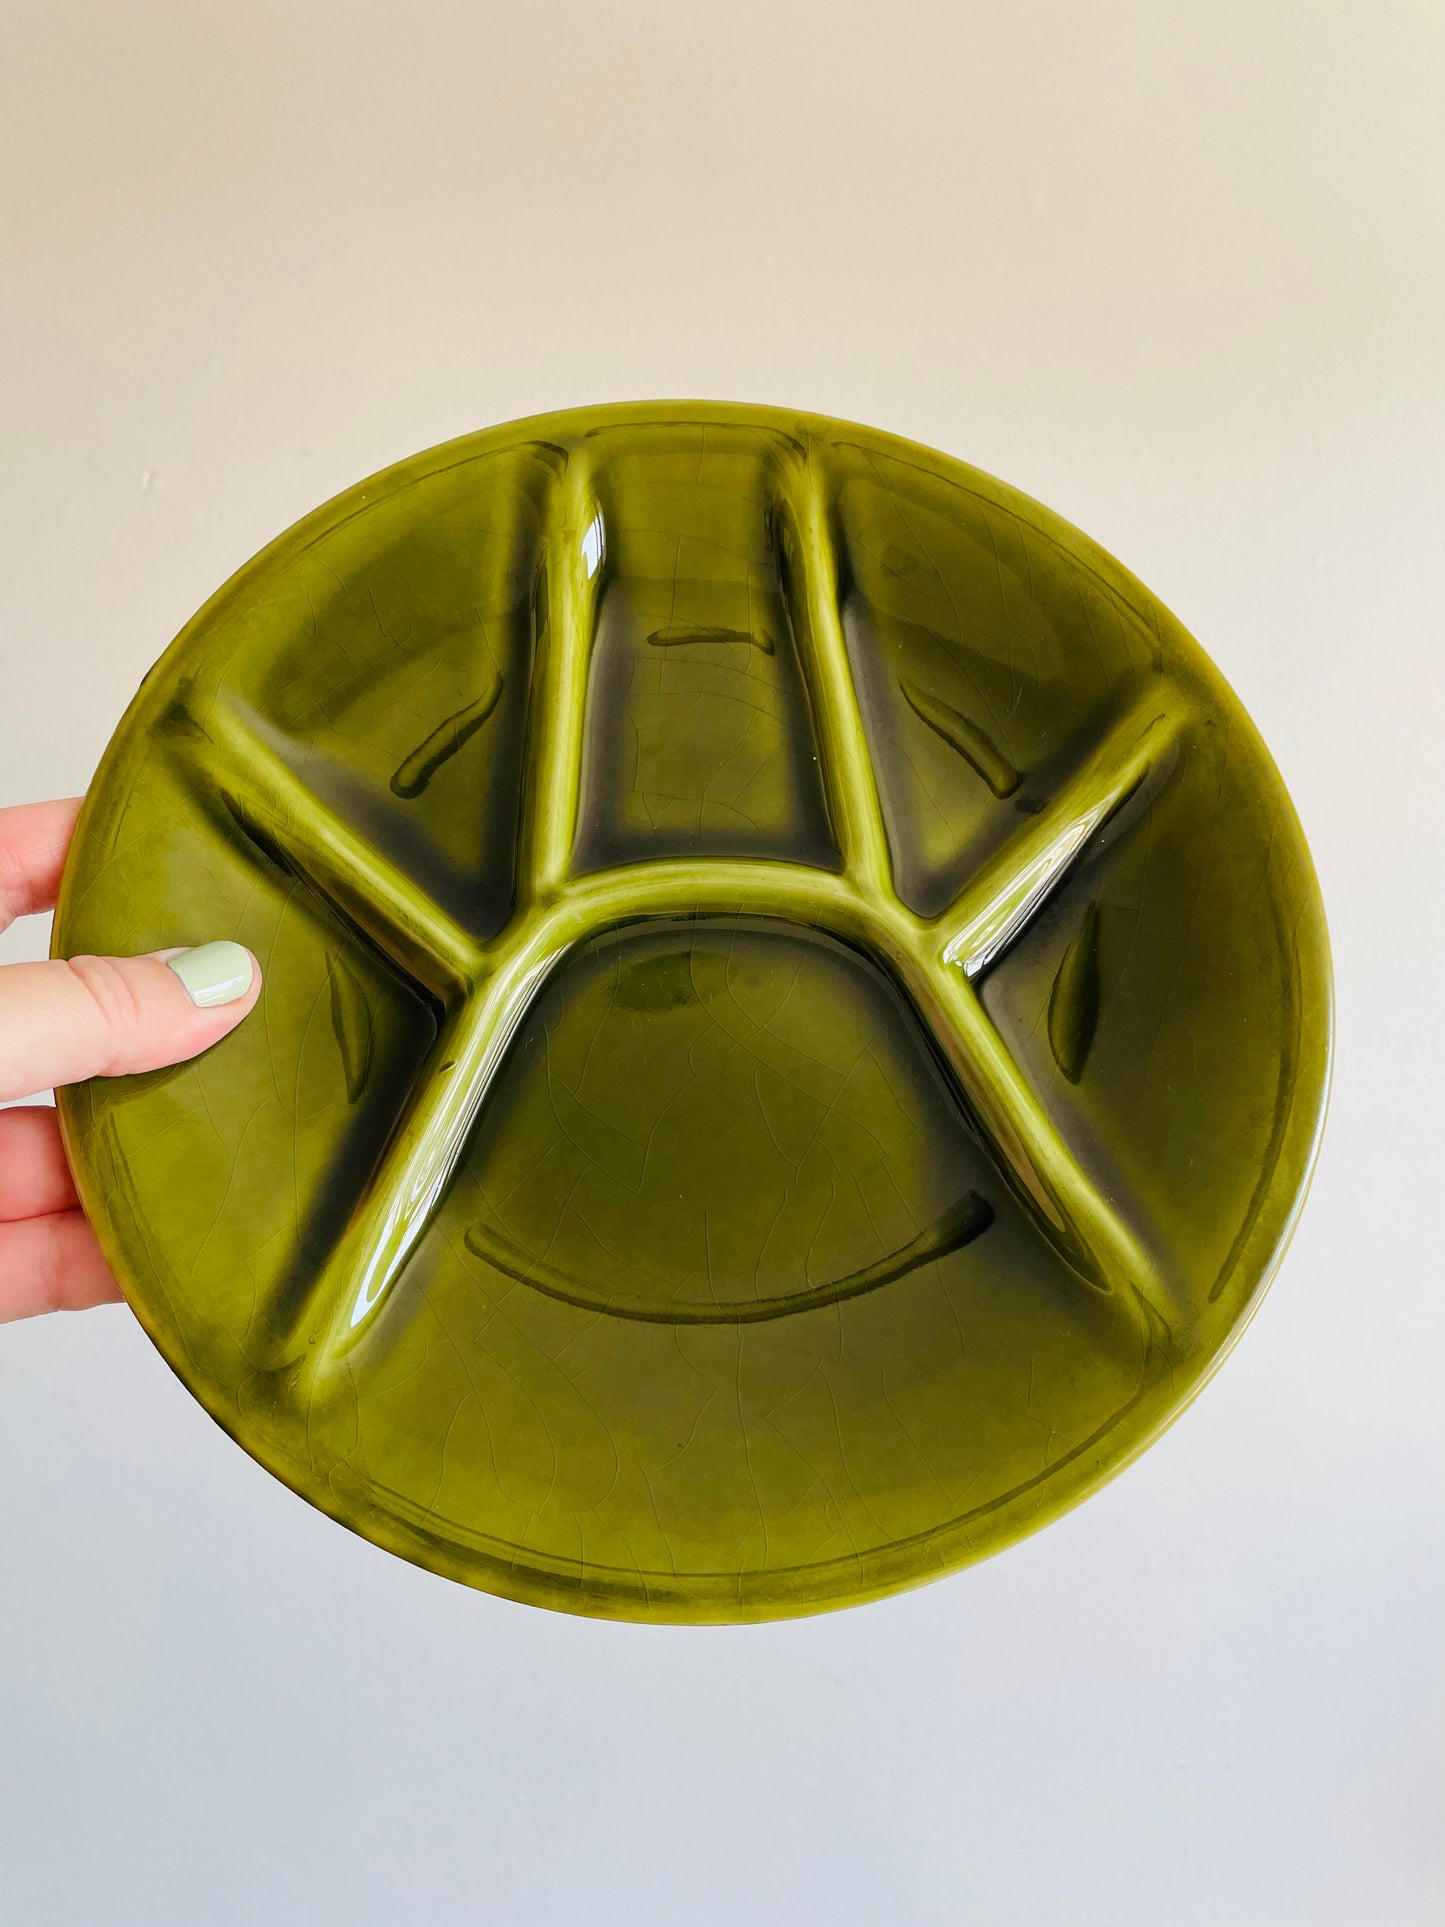 Keralux Boch Freres Belgium Ceramic Fondue Plates in Earthy Tones - Set of 5